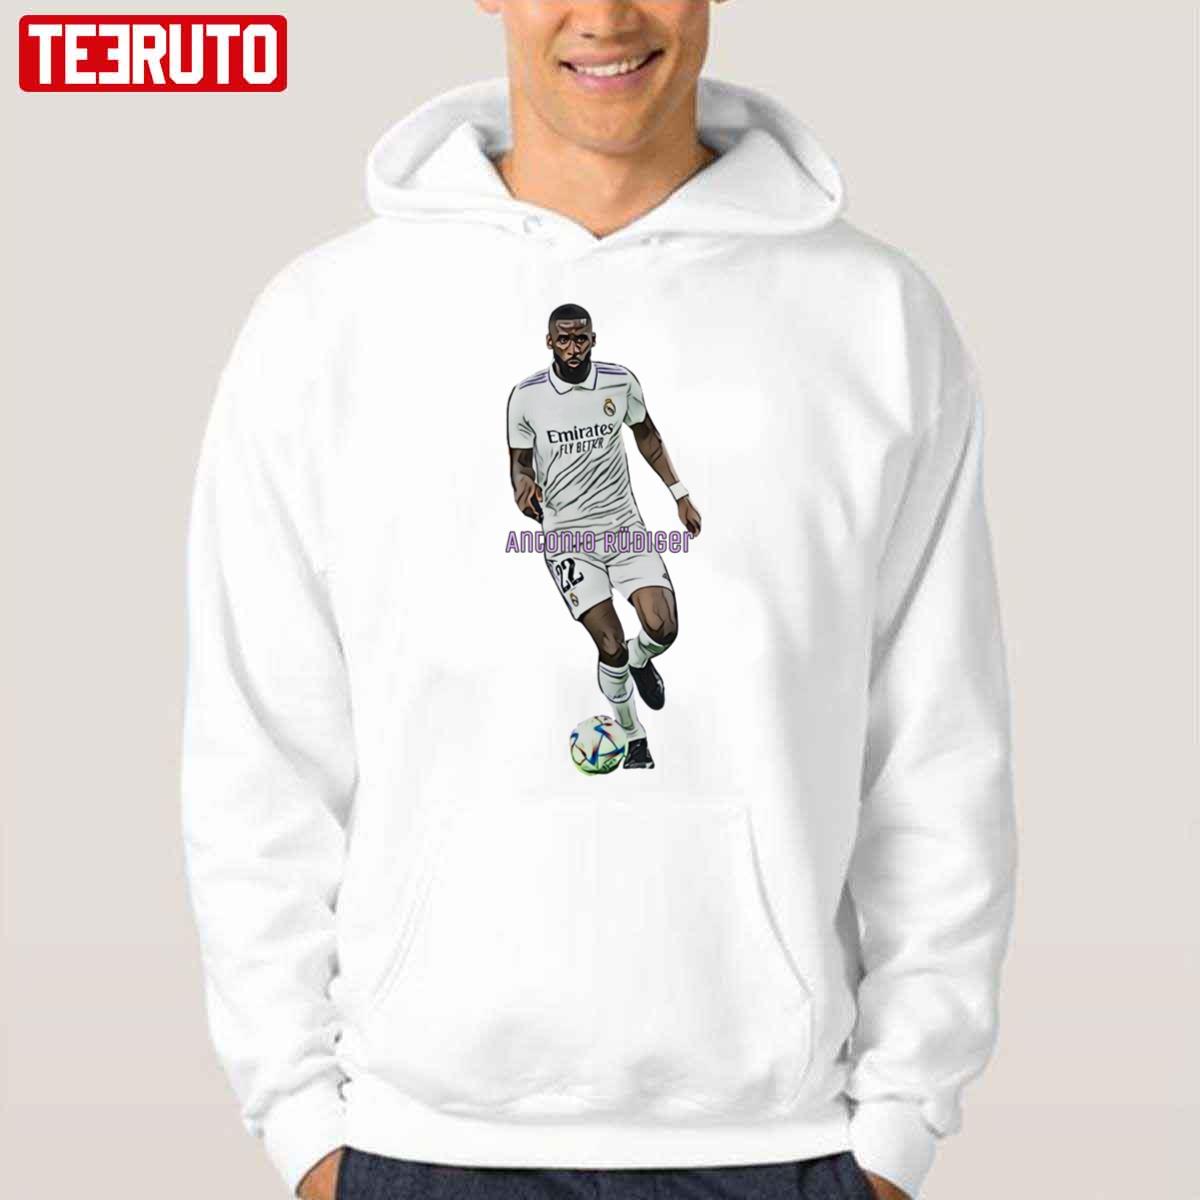 Antonio Rudiger Real Madrid’s Beast Unisex T-Shirt